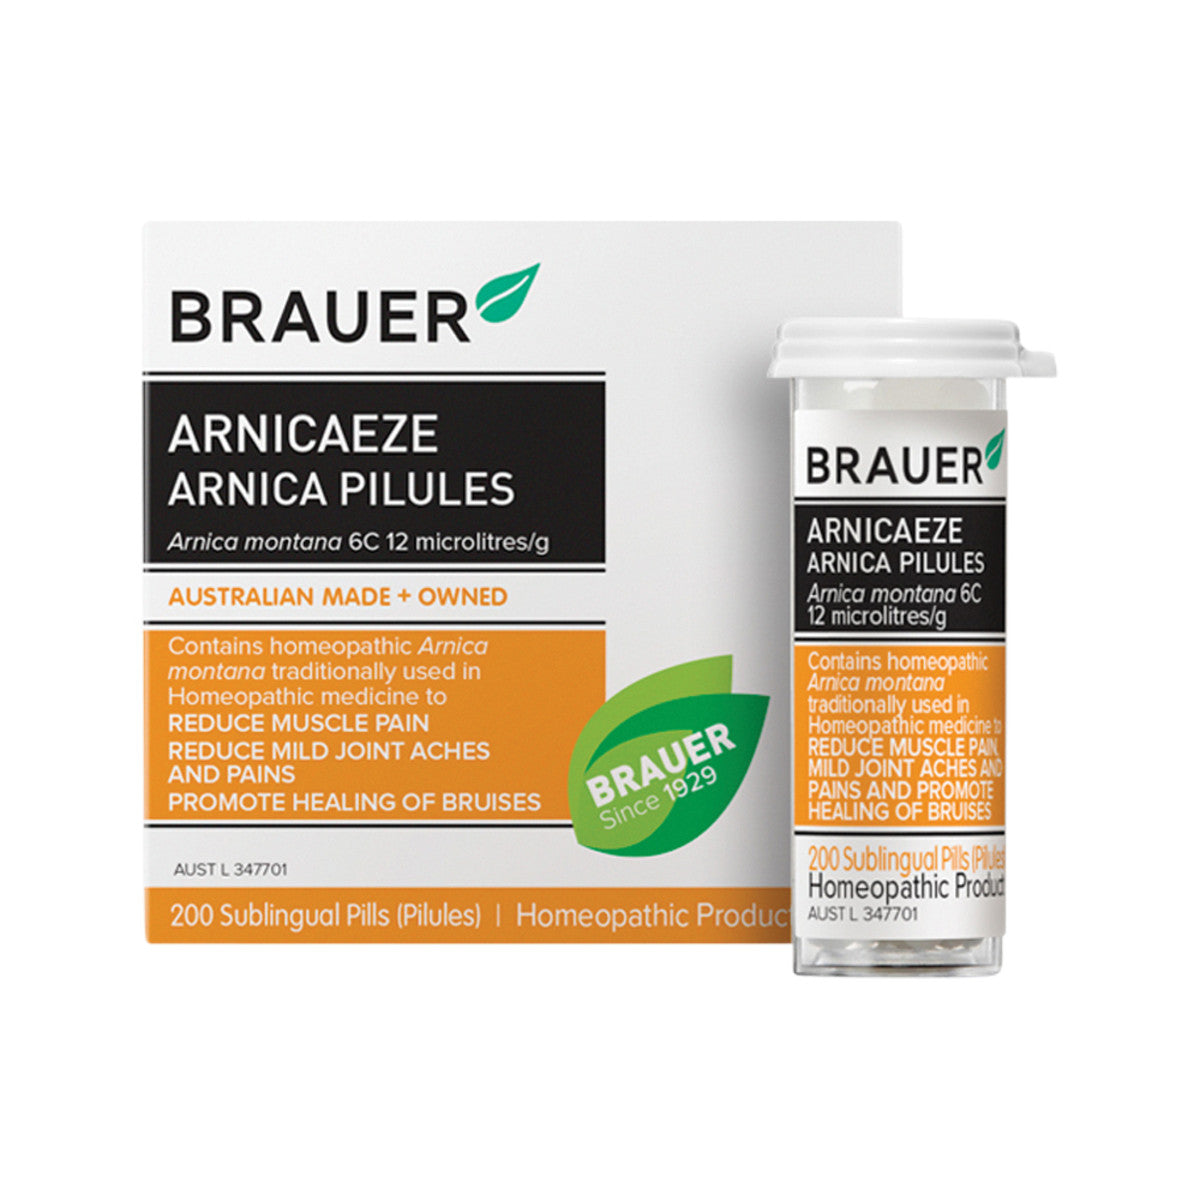 Brauer - ArnicaEze Arnica Pilules (6c)